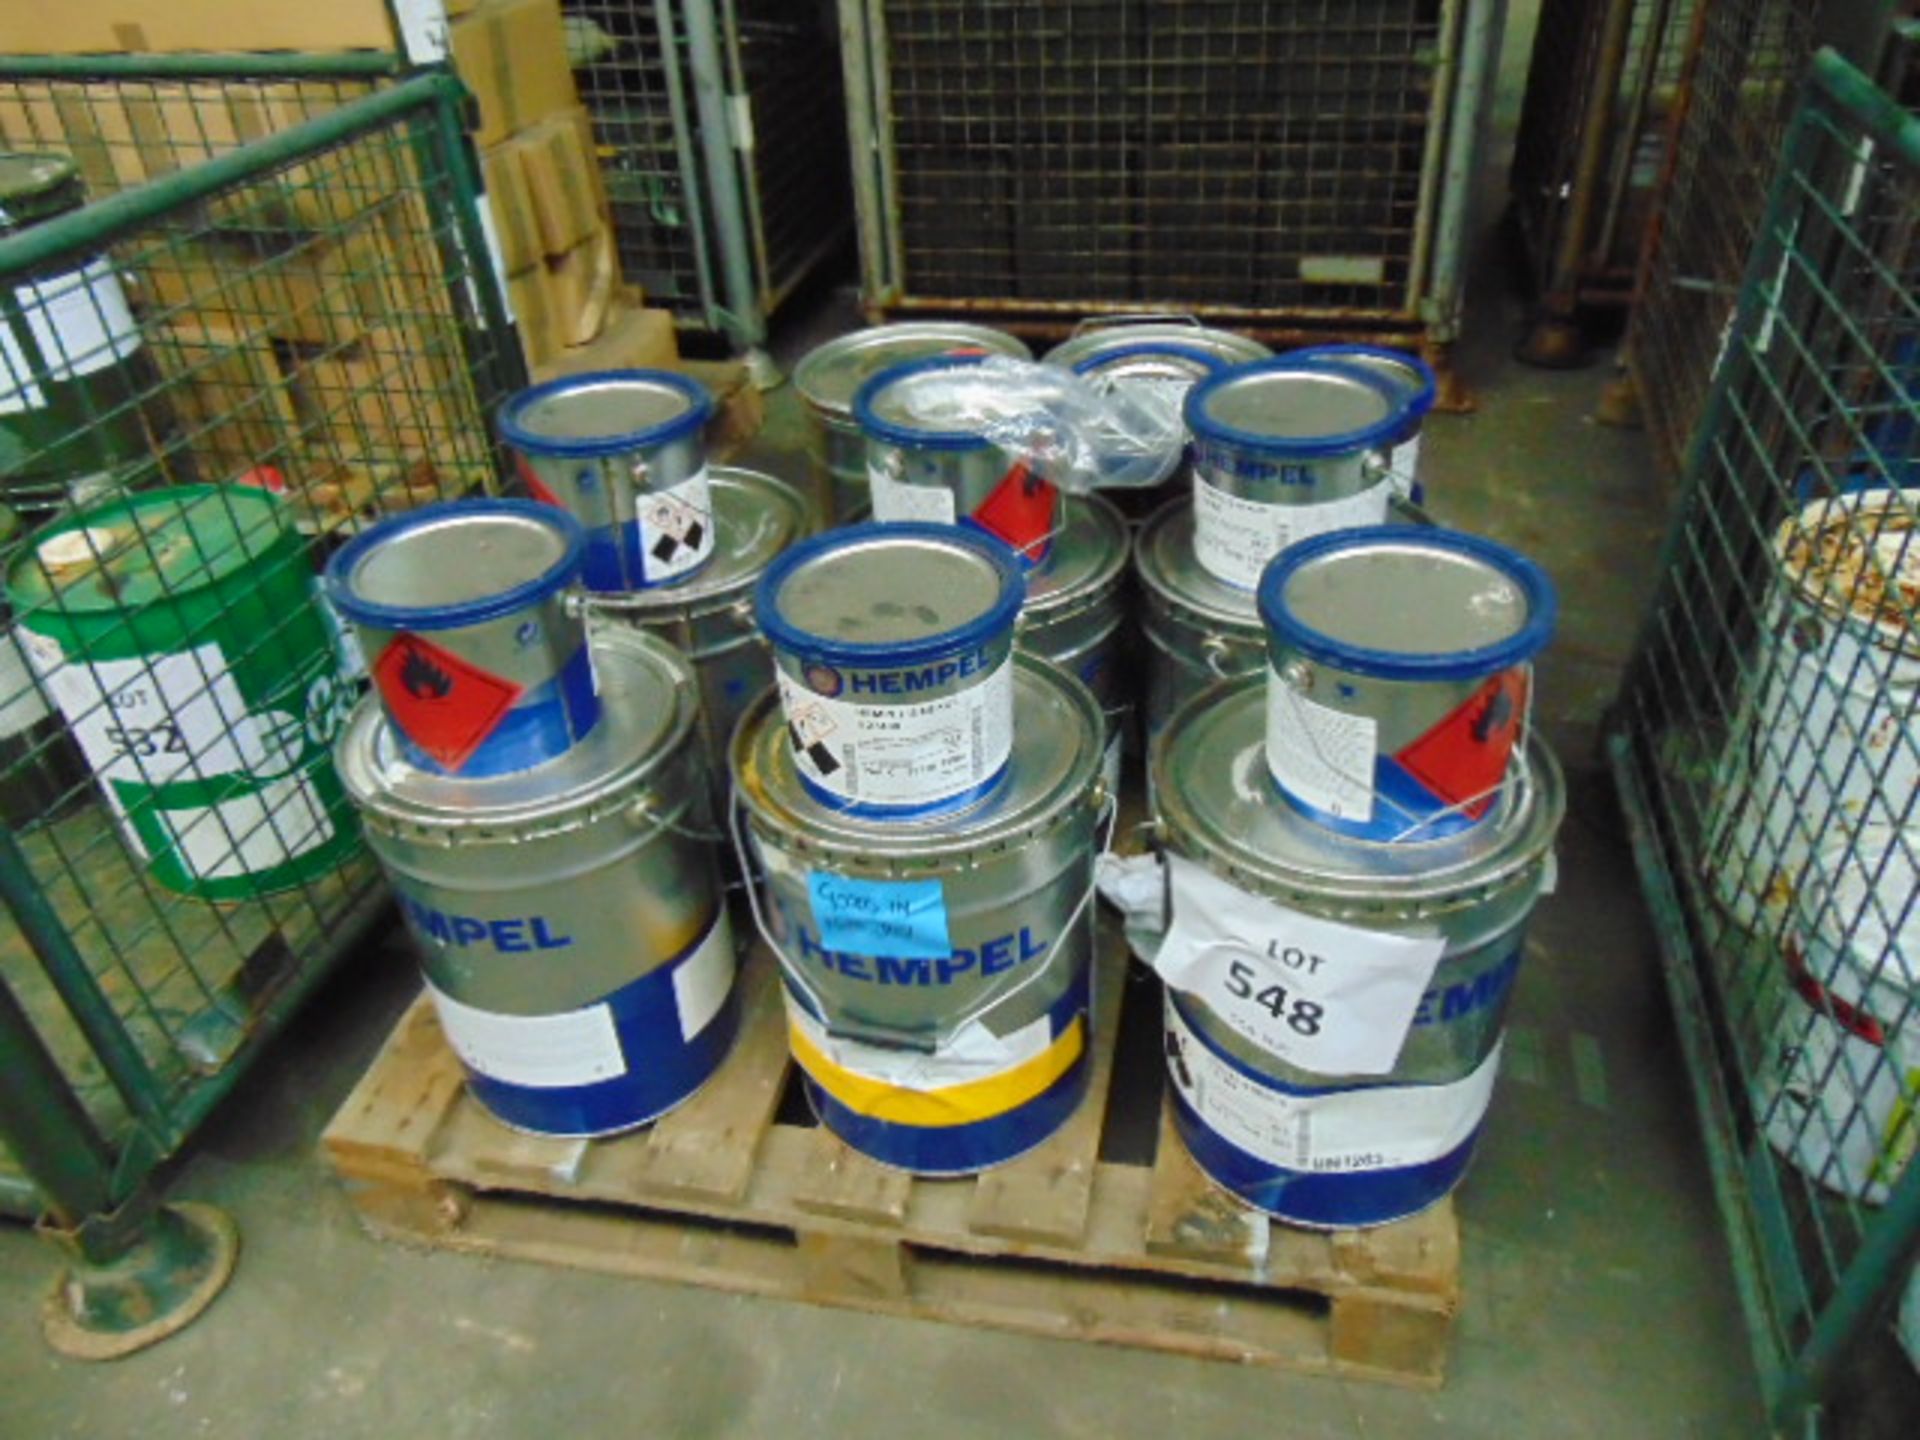 6x 20 litre Drums of Hempels Nexus 11 27400 3 pack Antifouling coating c/w thinners etc.MoD Reserve